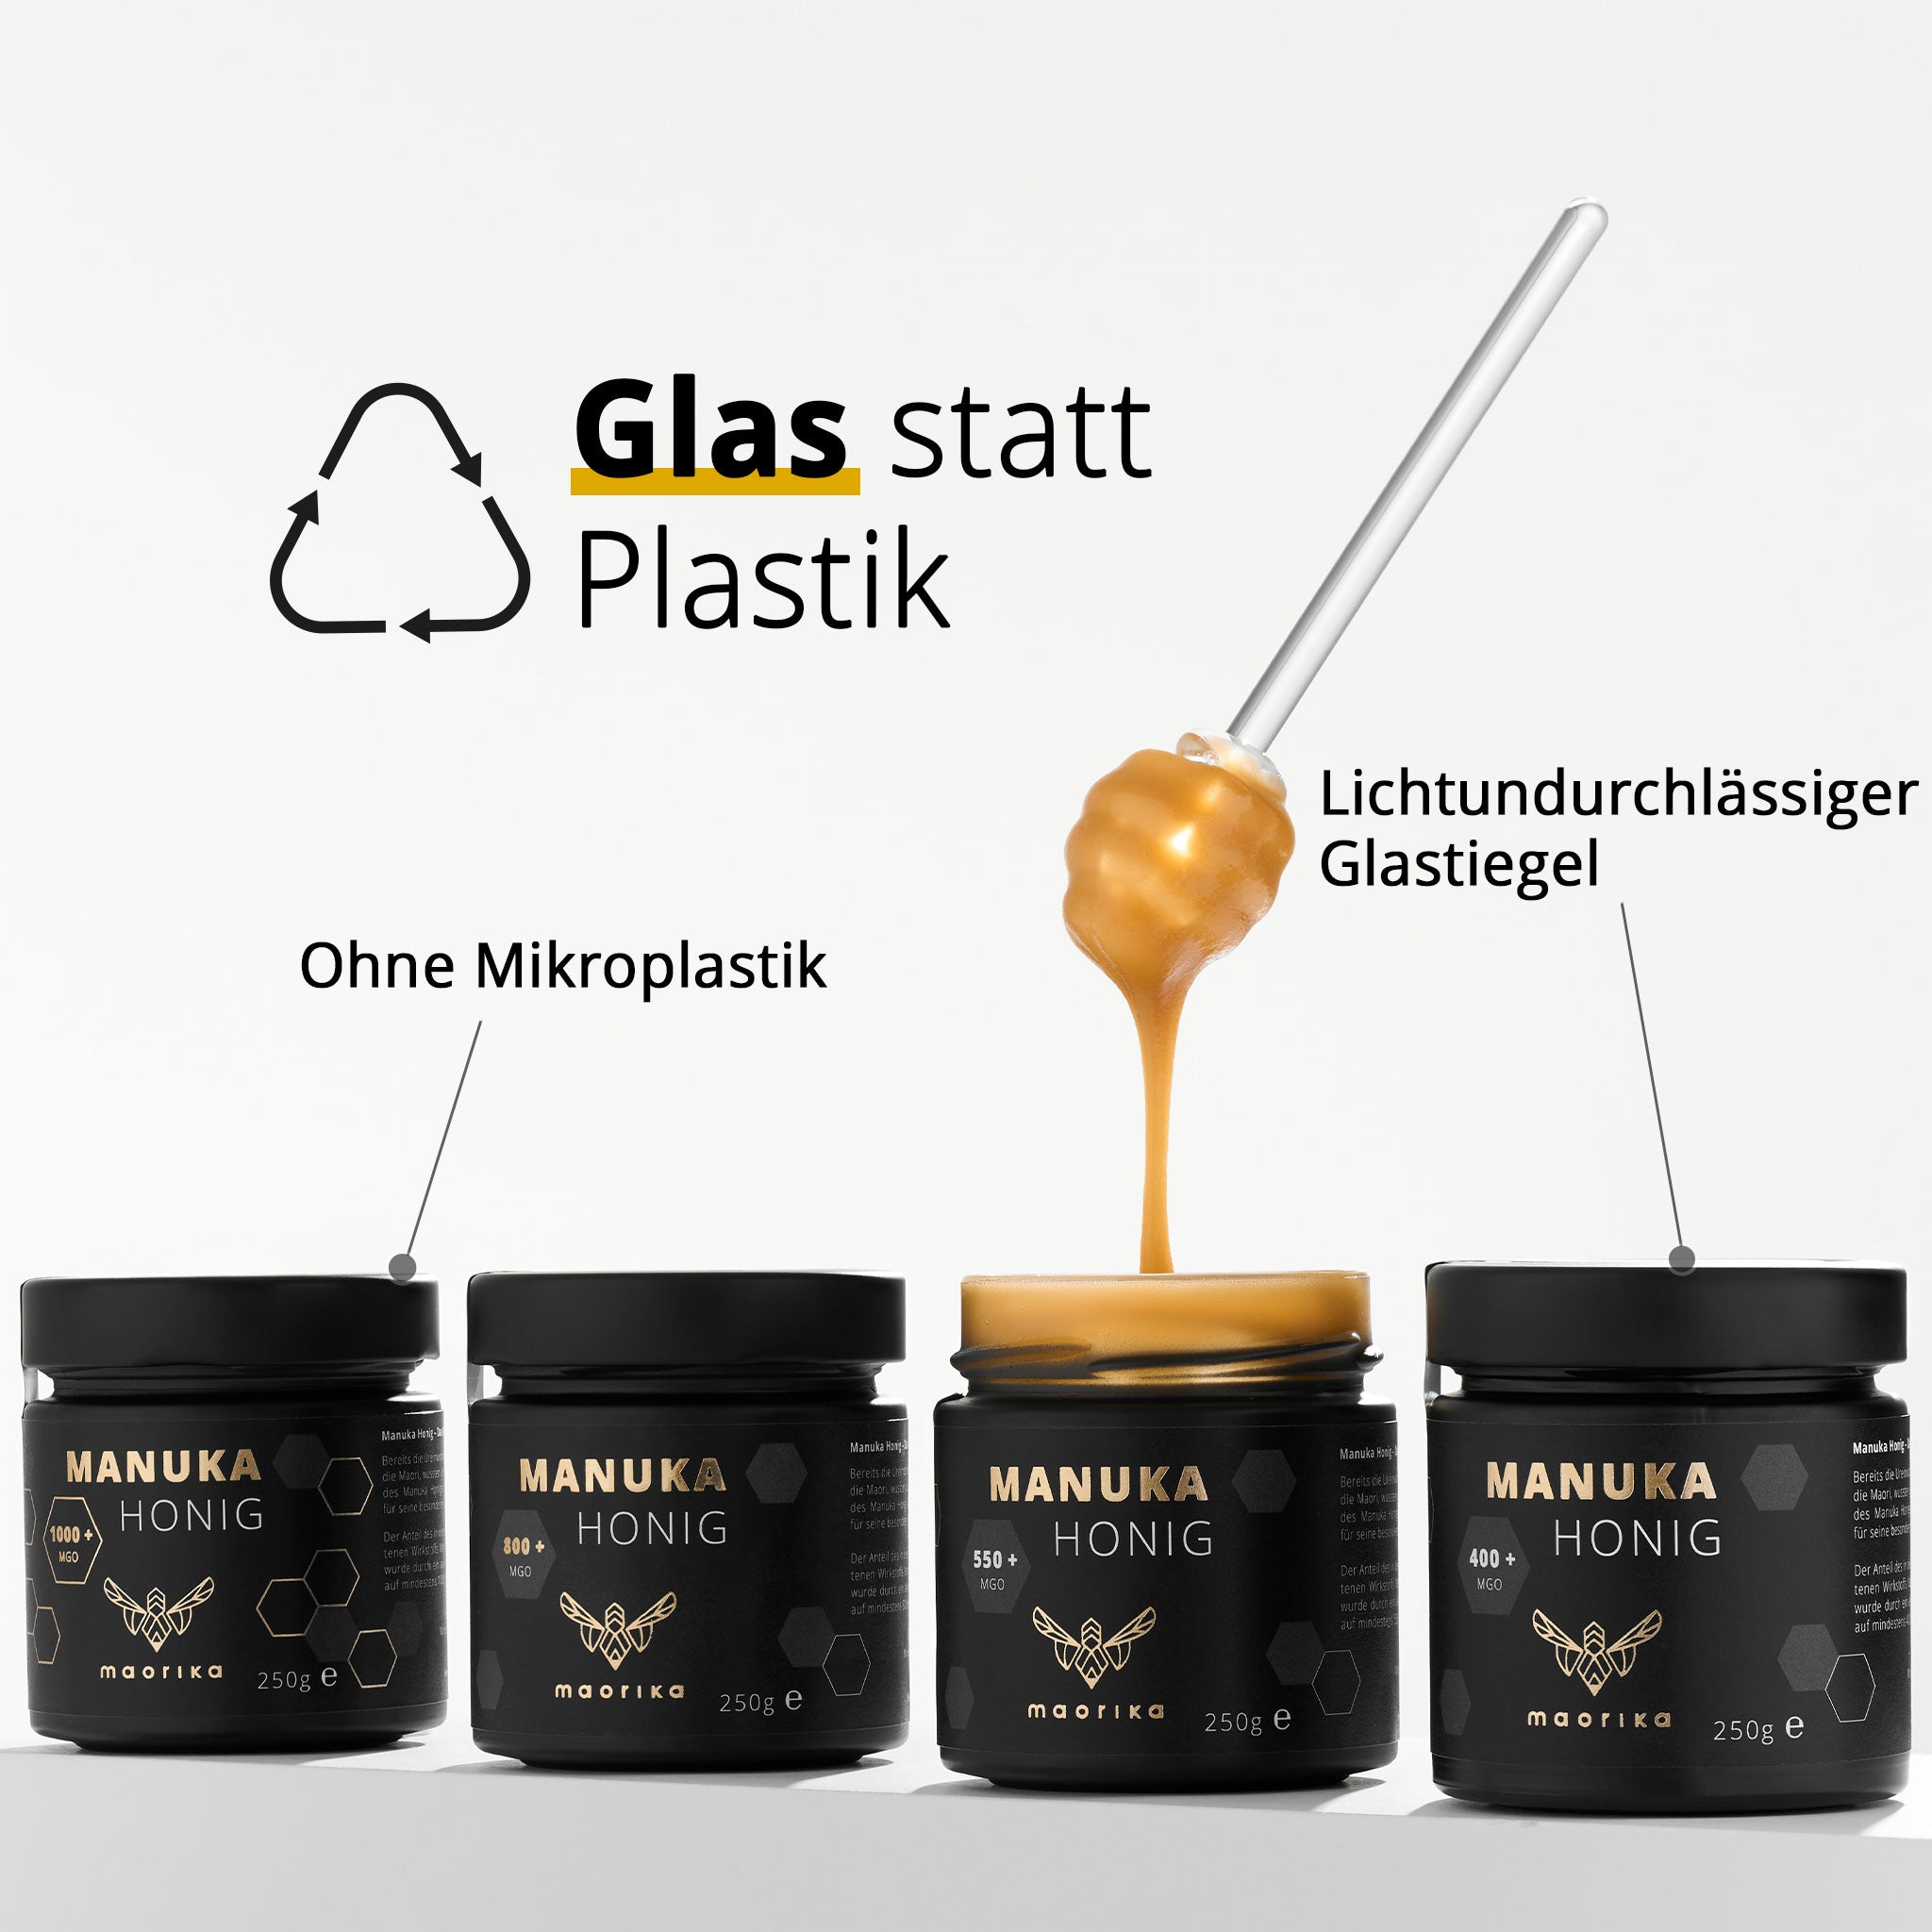 Manuka Honig MGO 550 + Gratis Manuka Halsbonbons